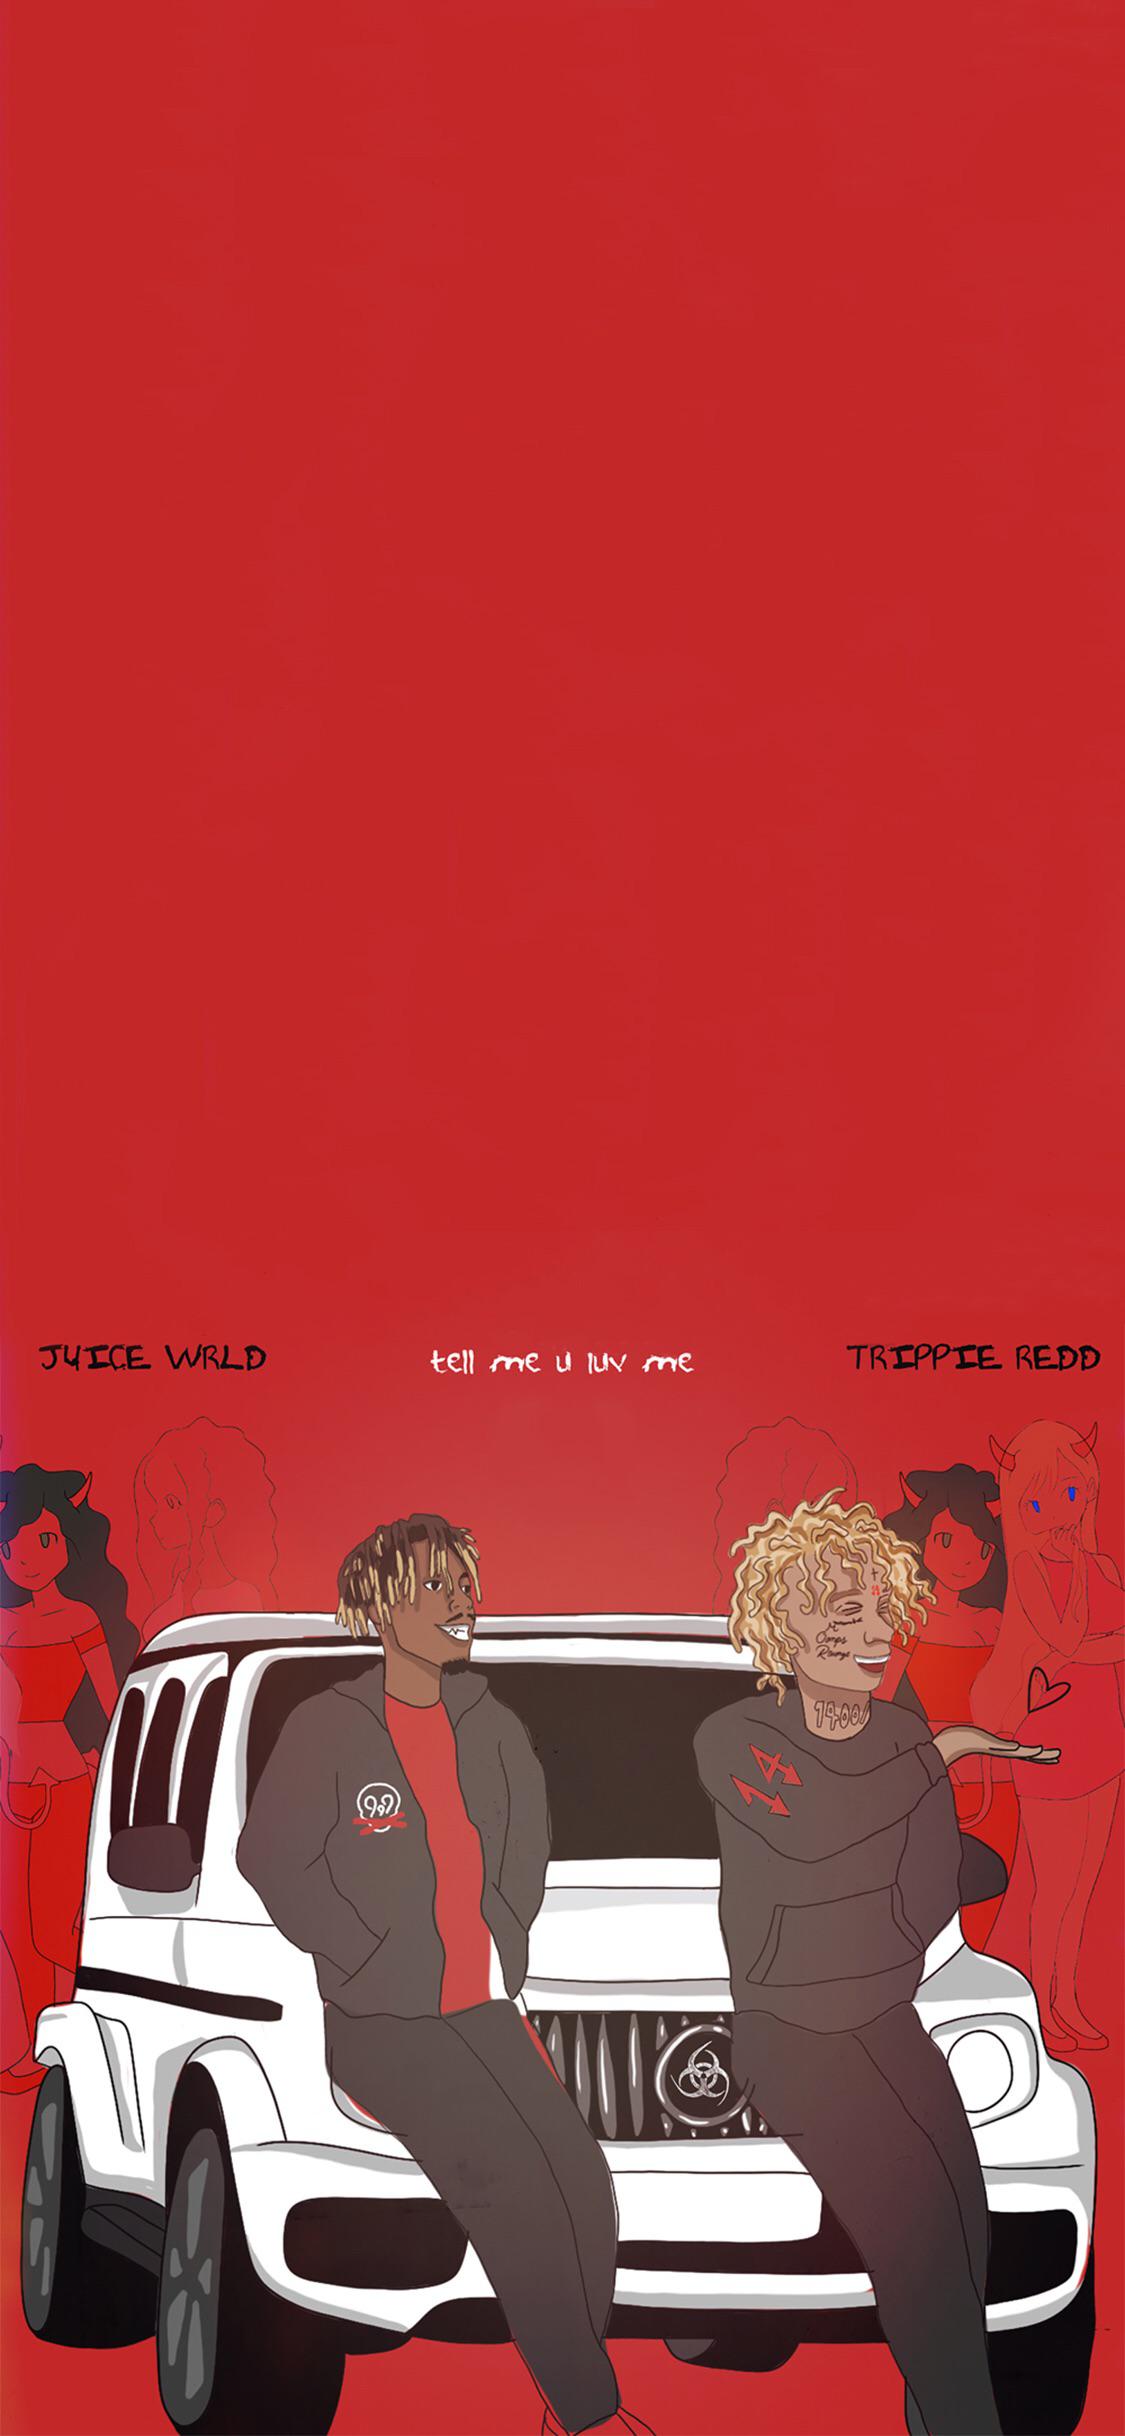 Tell me u luv me” Wallpaper by Juice Wrld and Trippie Redd